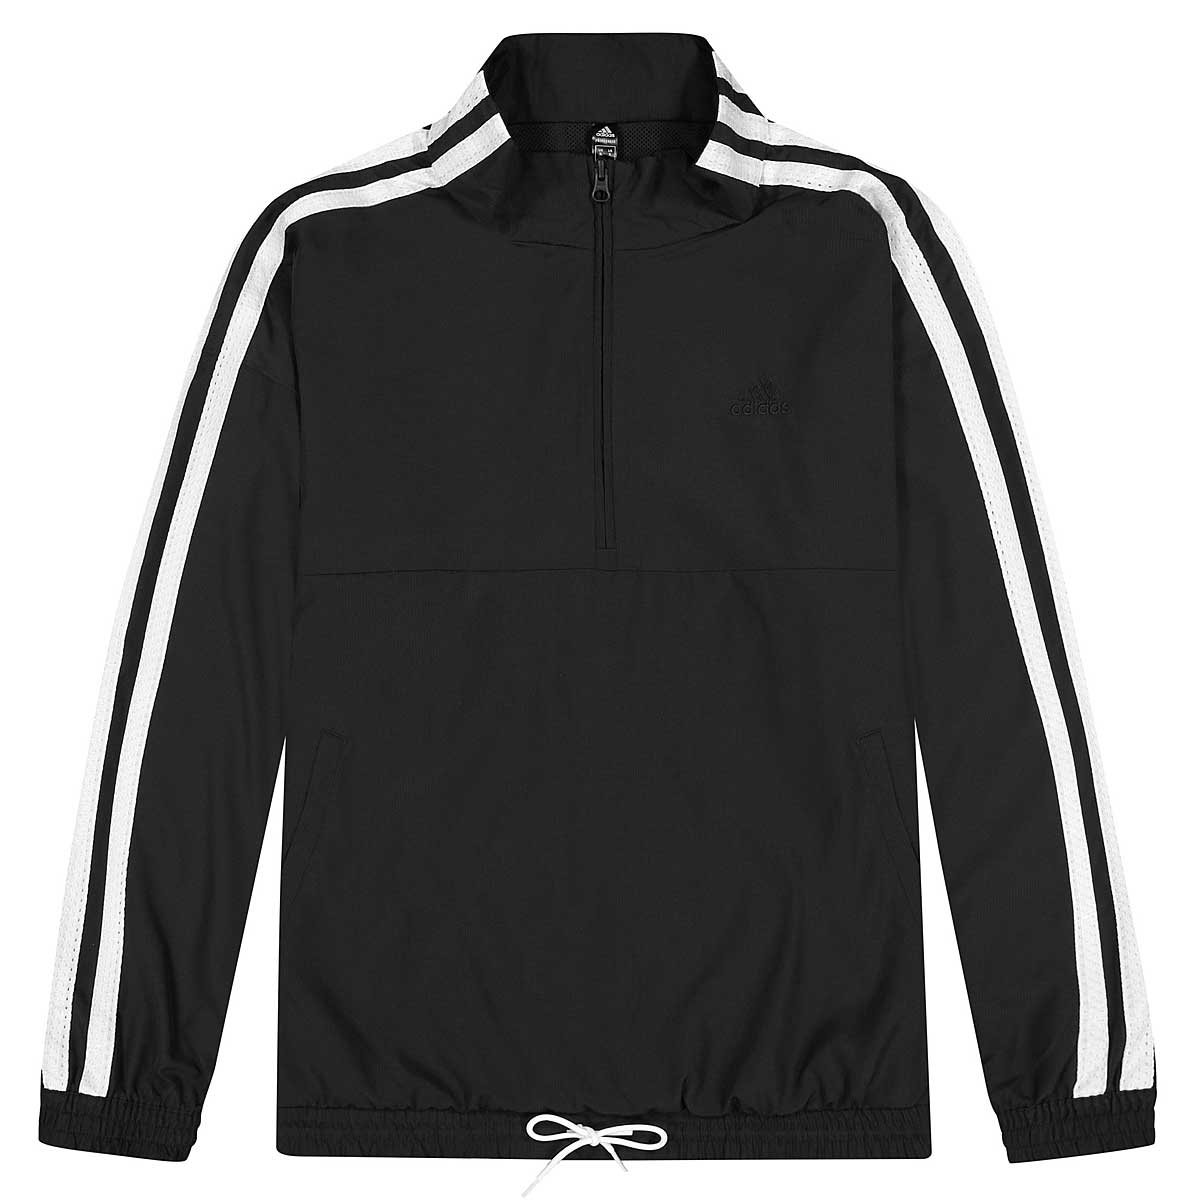 Adidas Originals Smr Ld 1/4 Zip, Black